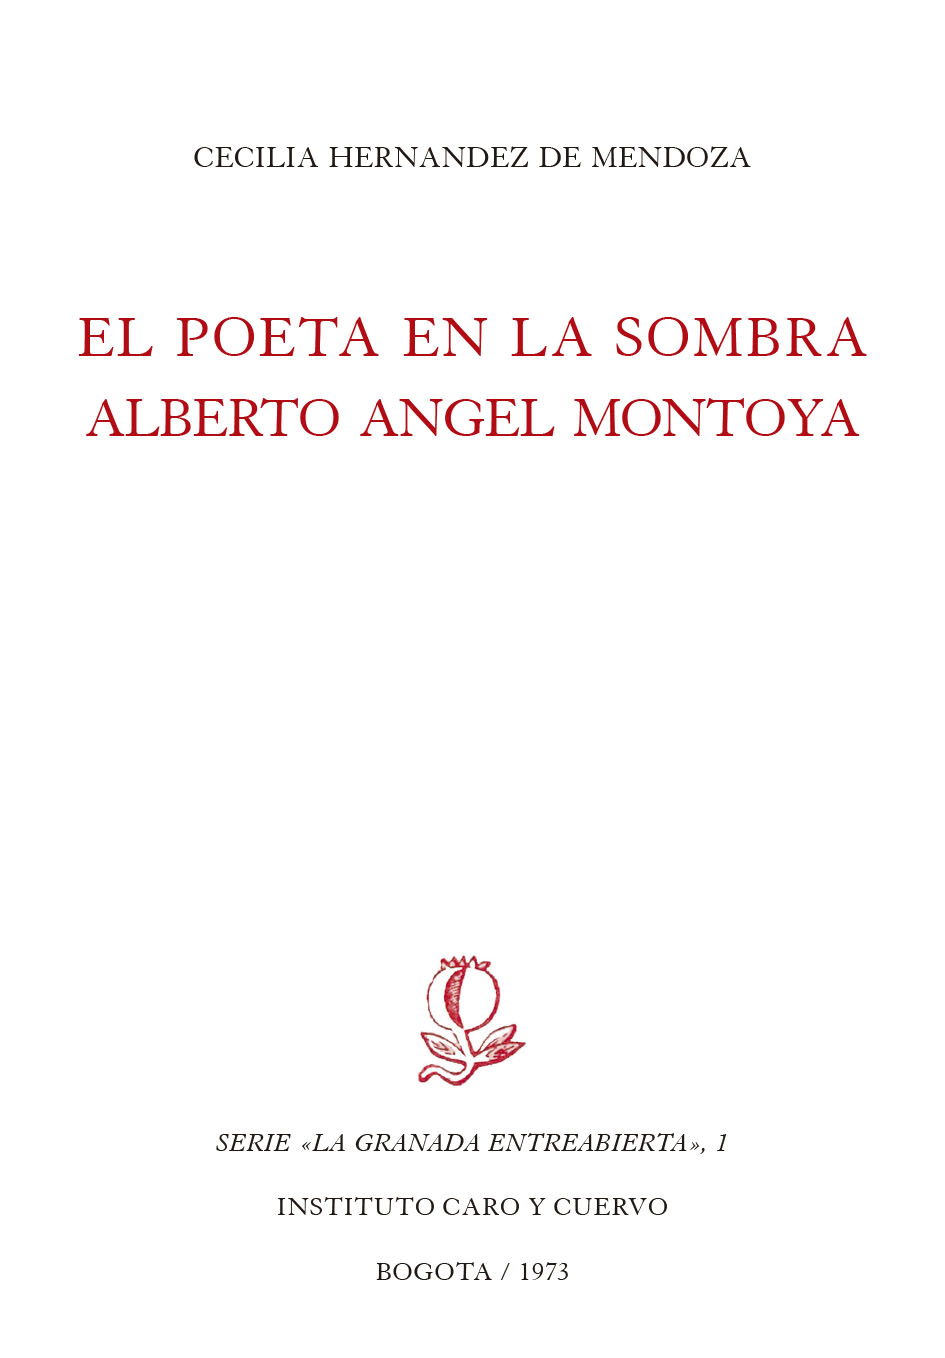 El poeta en la sombra: Alberto Ángel Montoya